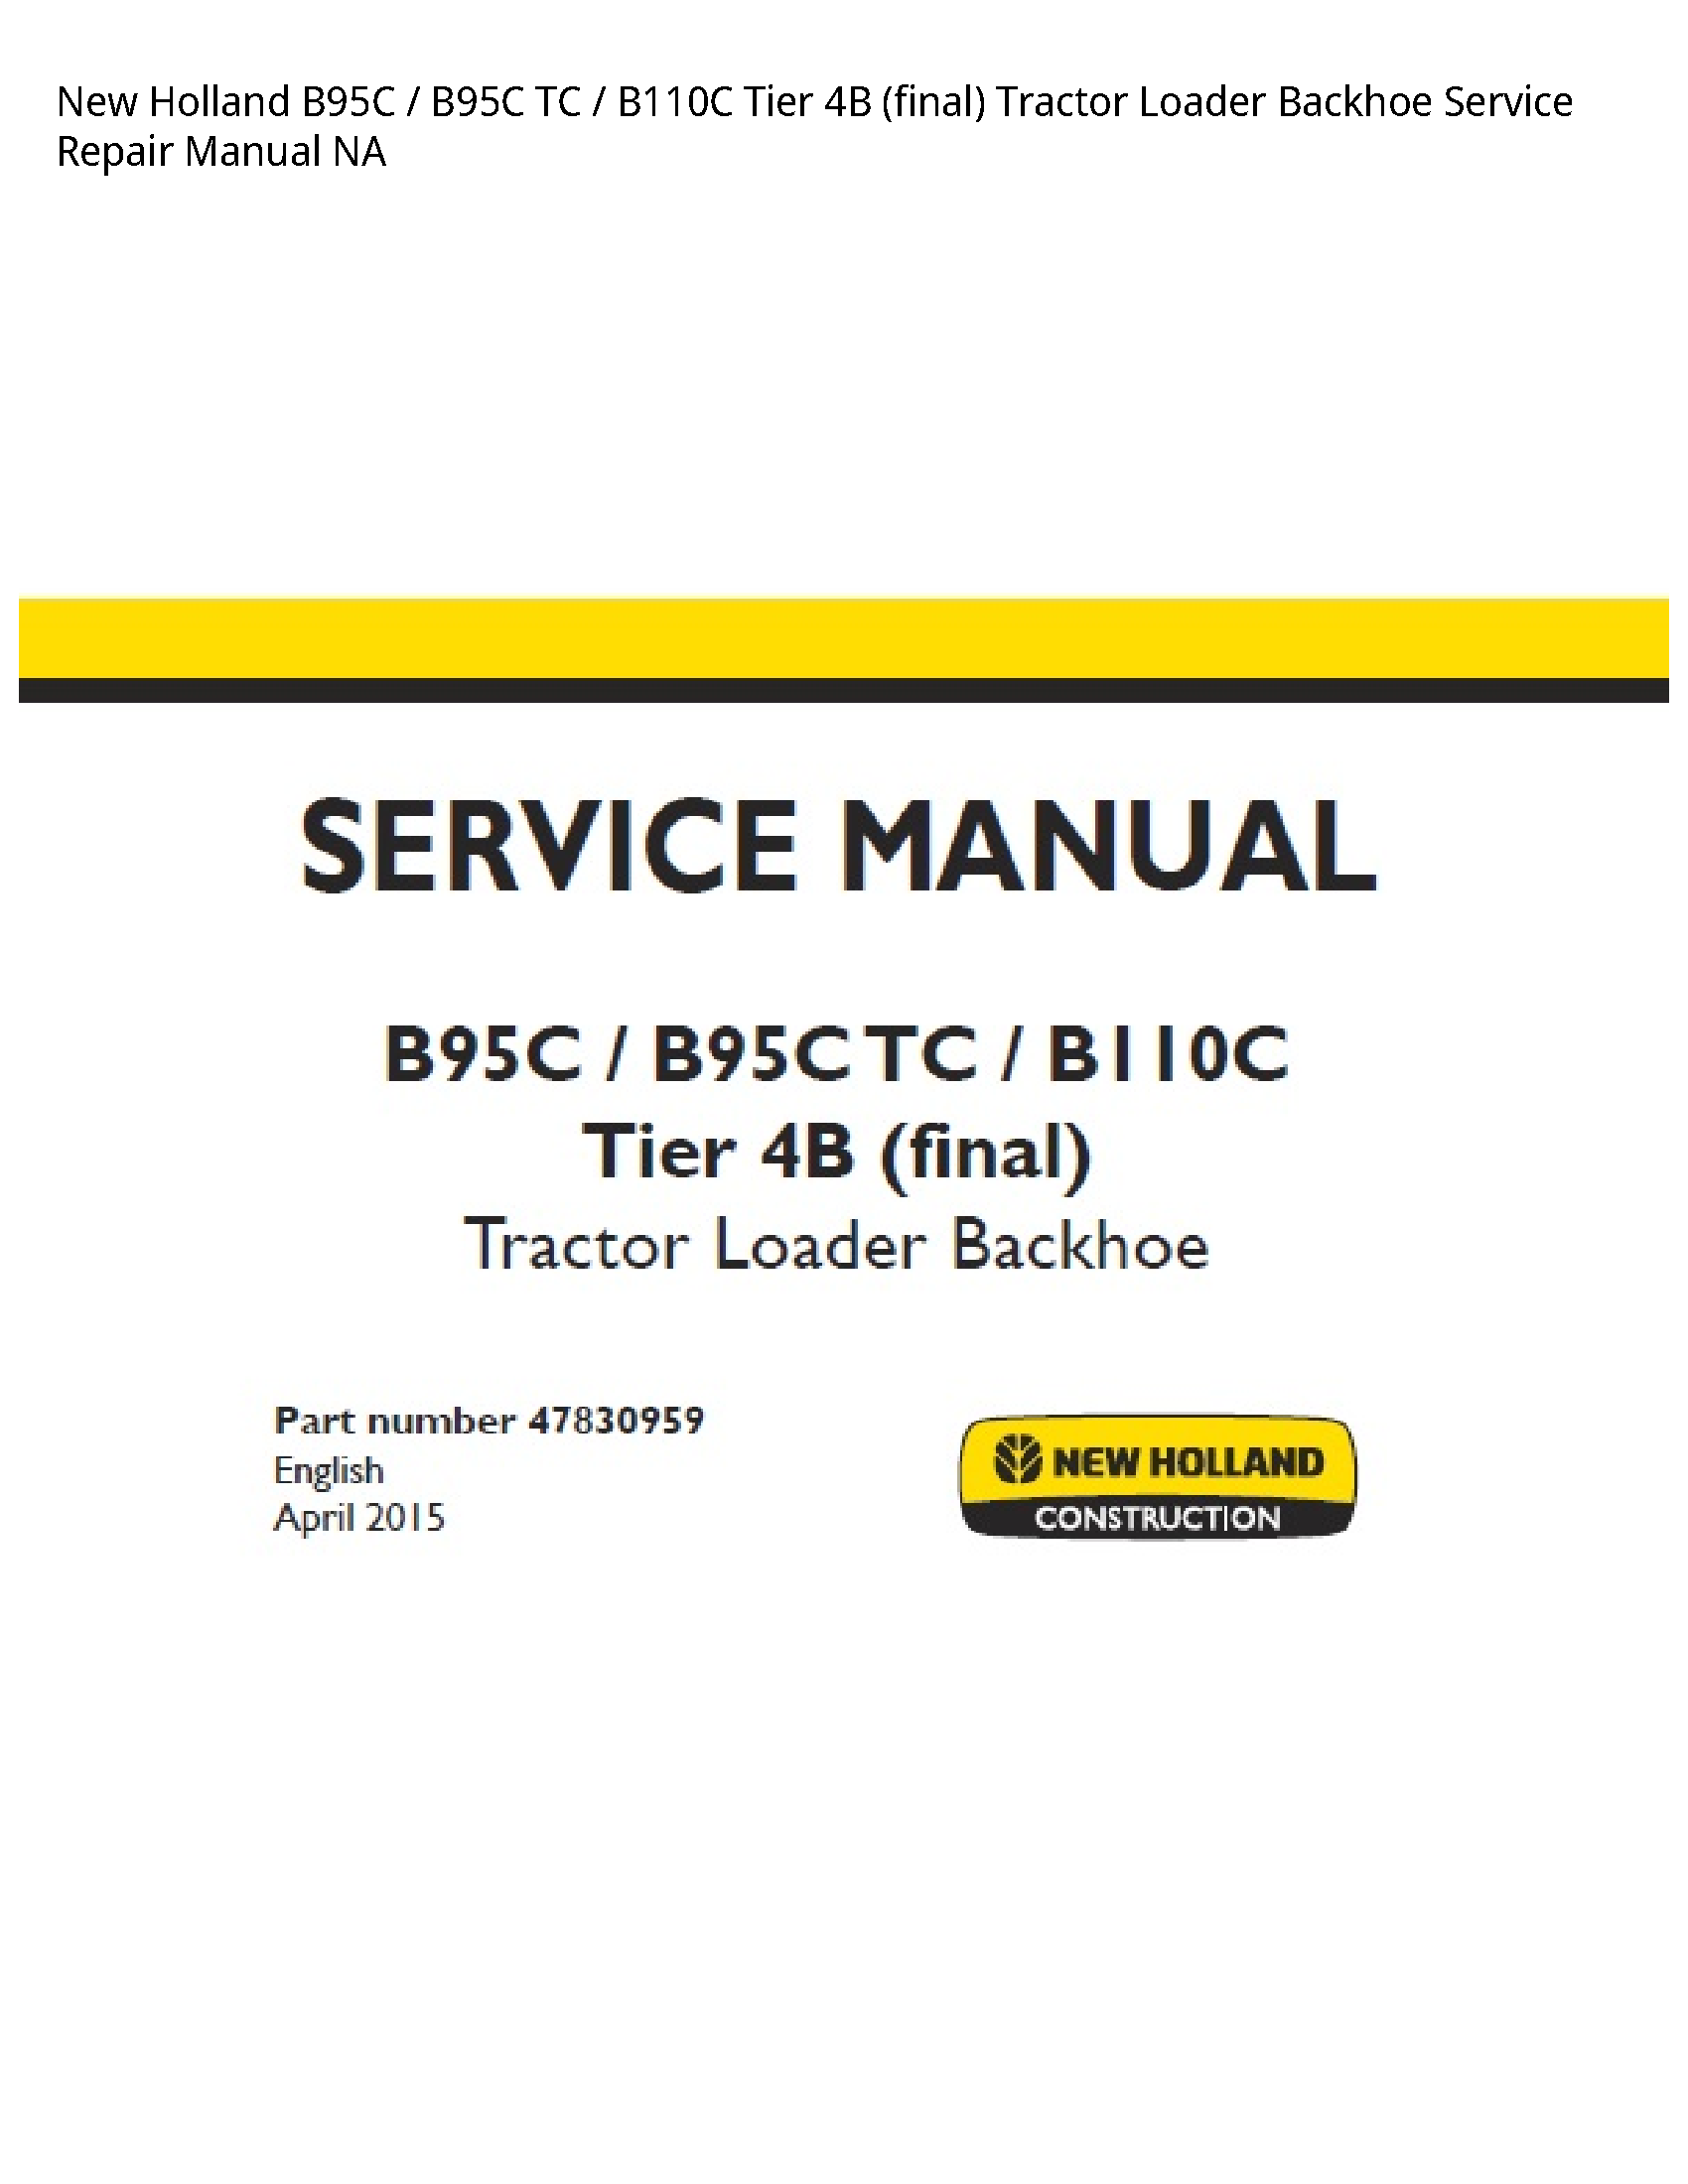 New Holland B95C TC Tier (final) Tractor Loader Backhoe manual